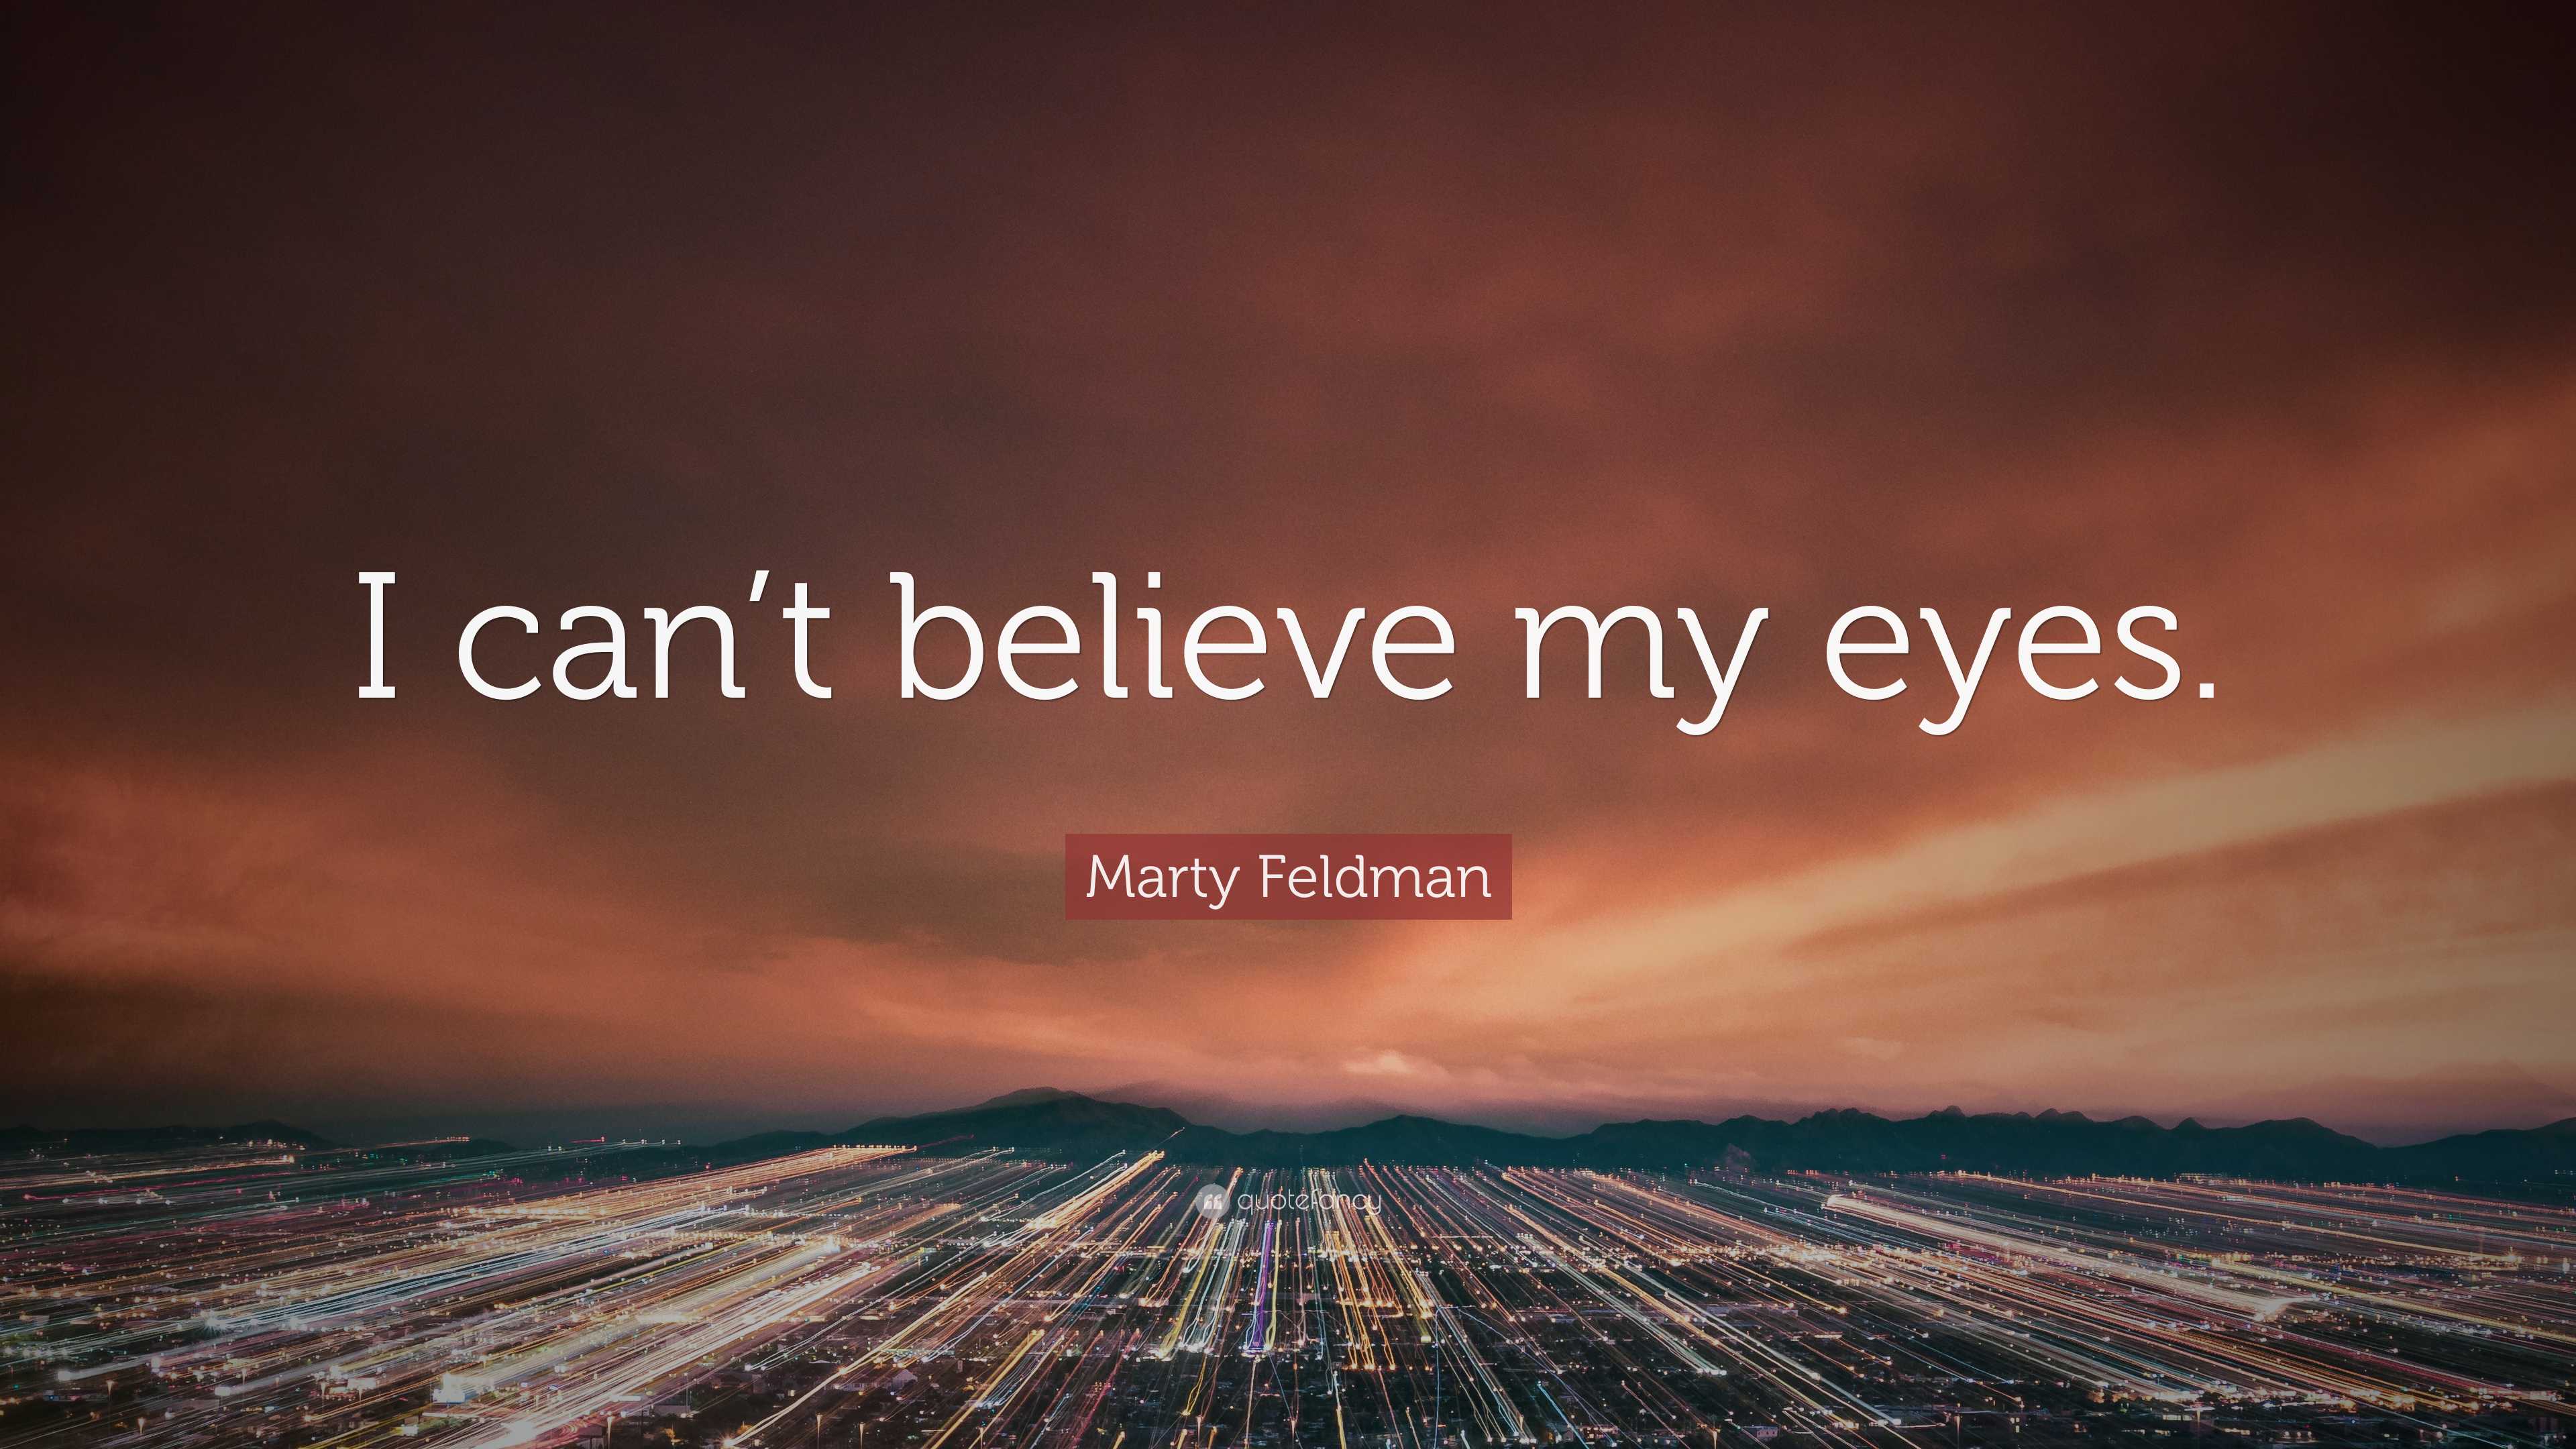 Marty Feldman Quote: “I can't believe my eyes.”